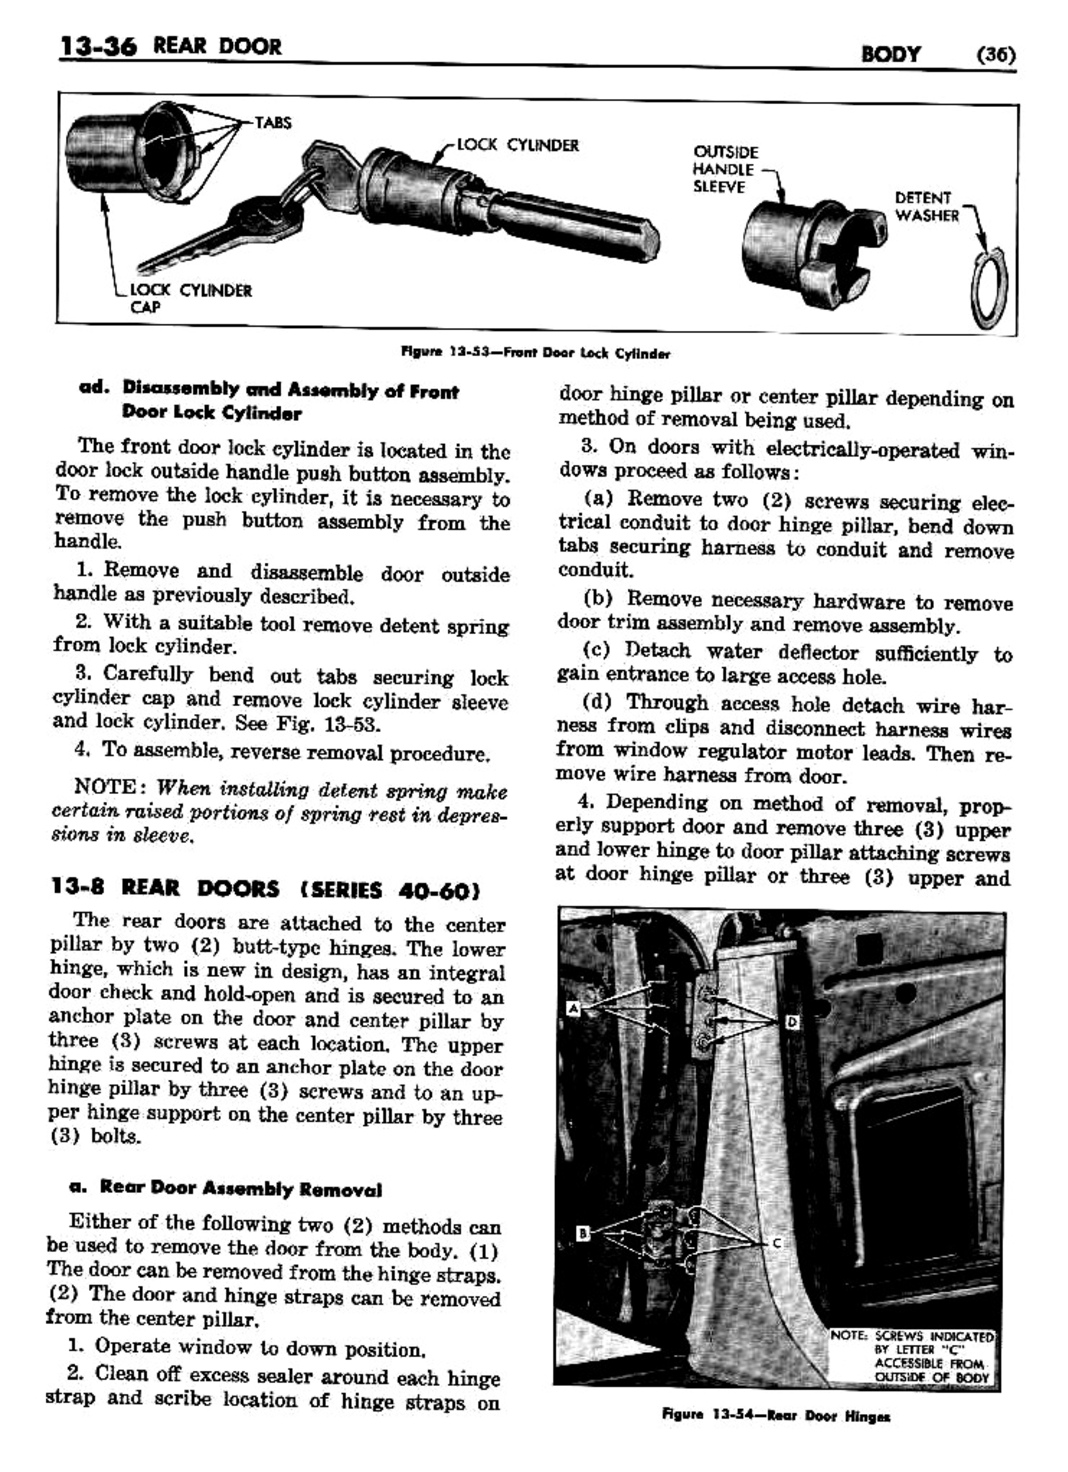 n_1957 Buick Body Service Manual-038-038.jpg